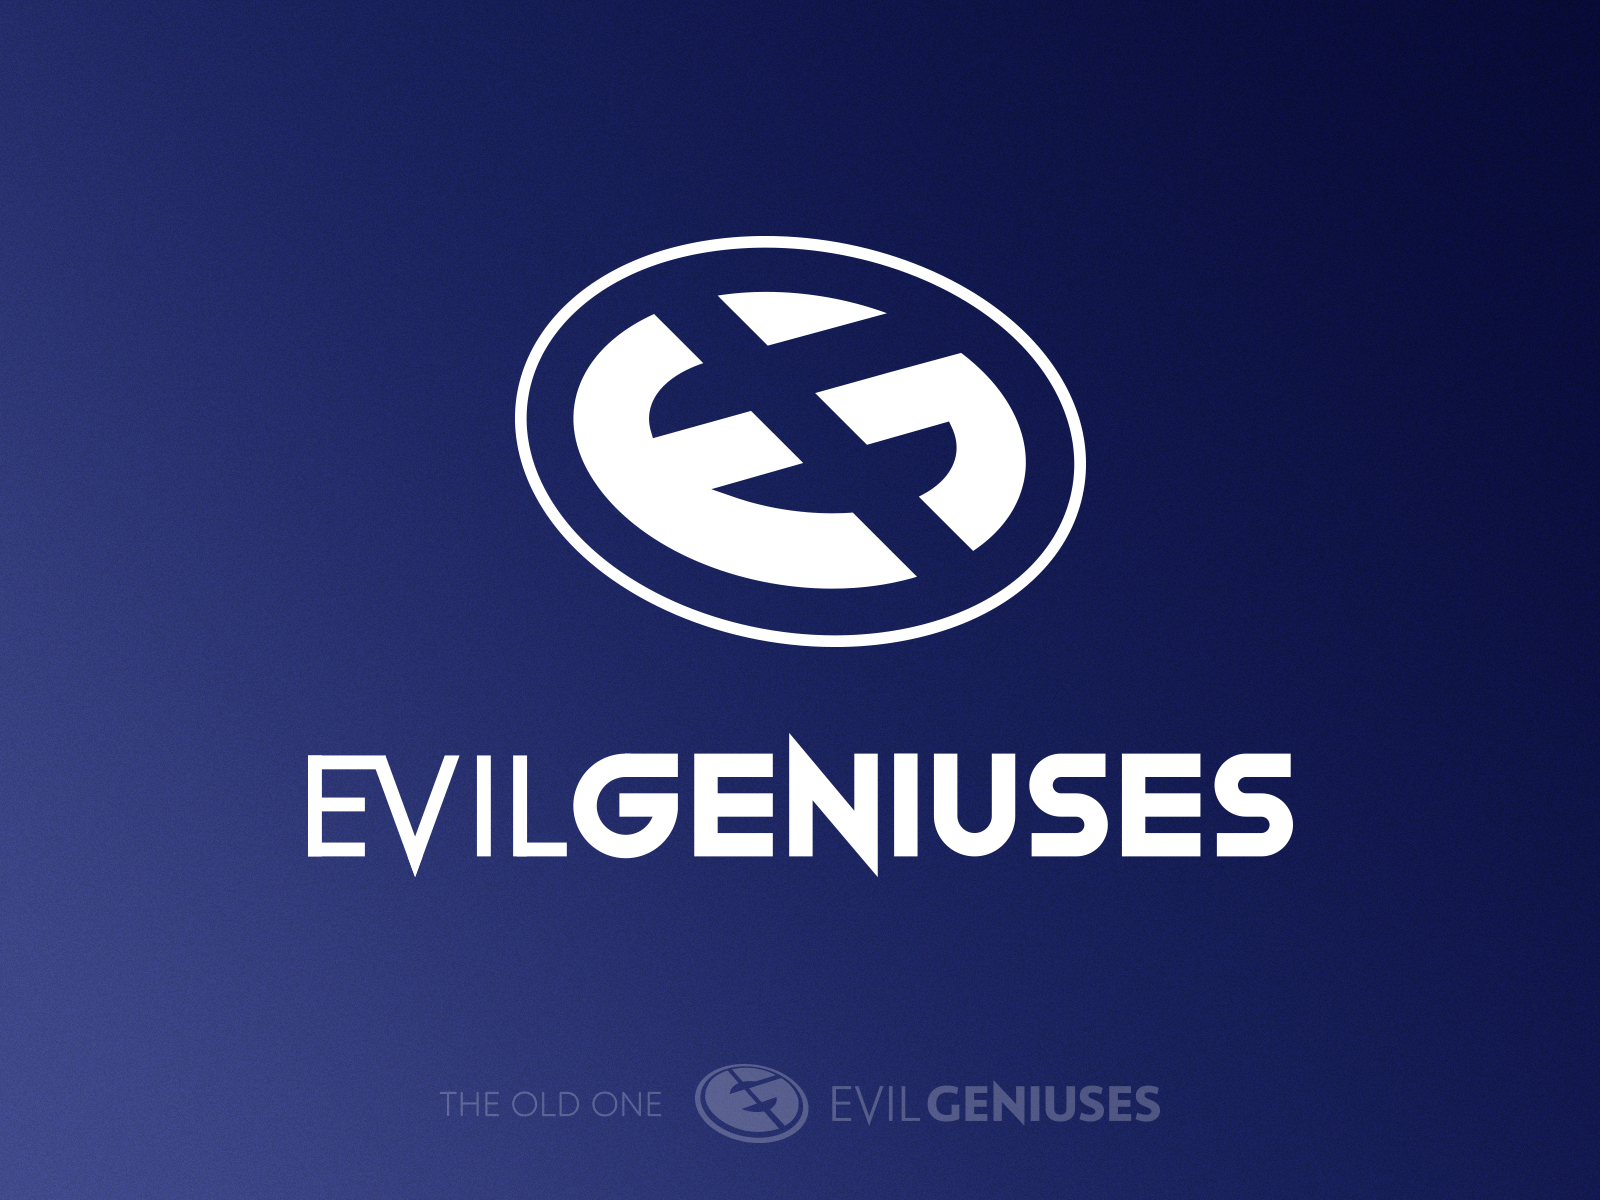 Evil Geniuses 2020 logo update concept by Alexander GK on Dribbble